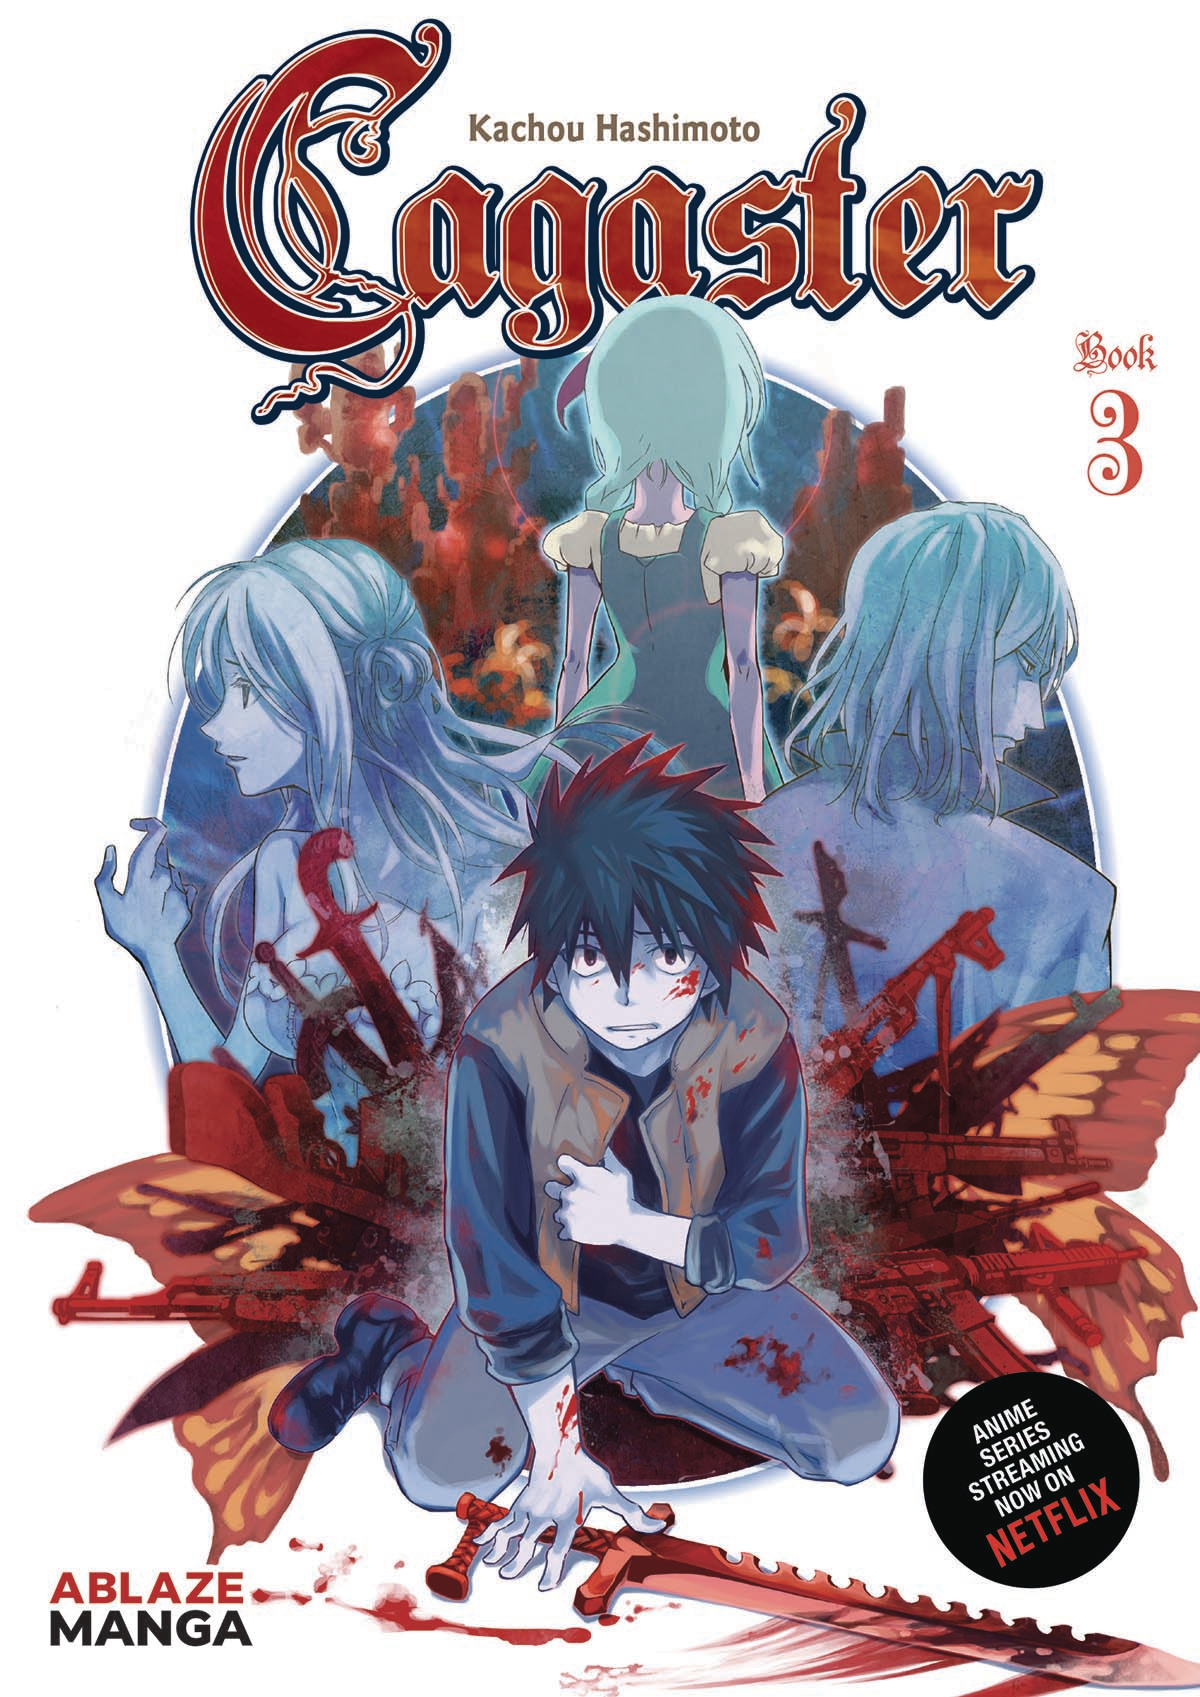 Cagaster Manga Volume 3